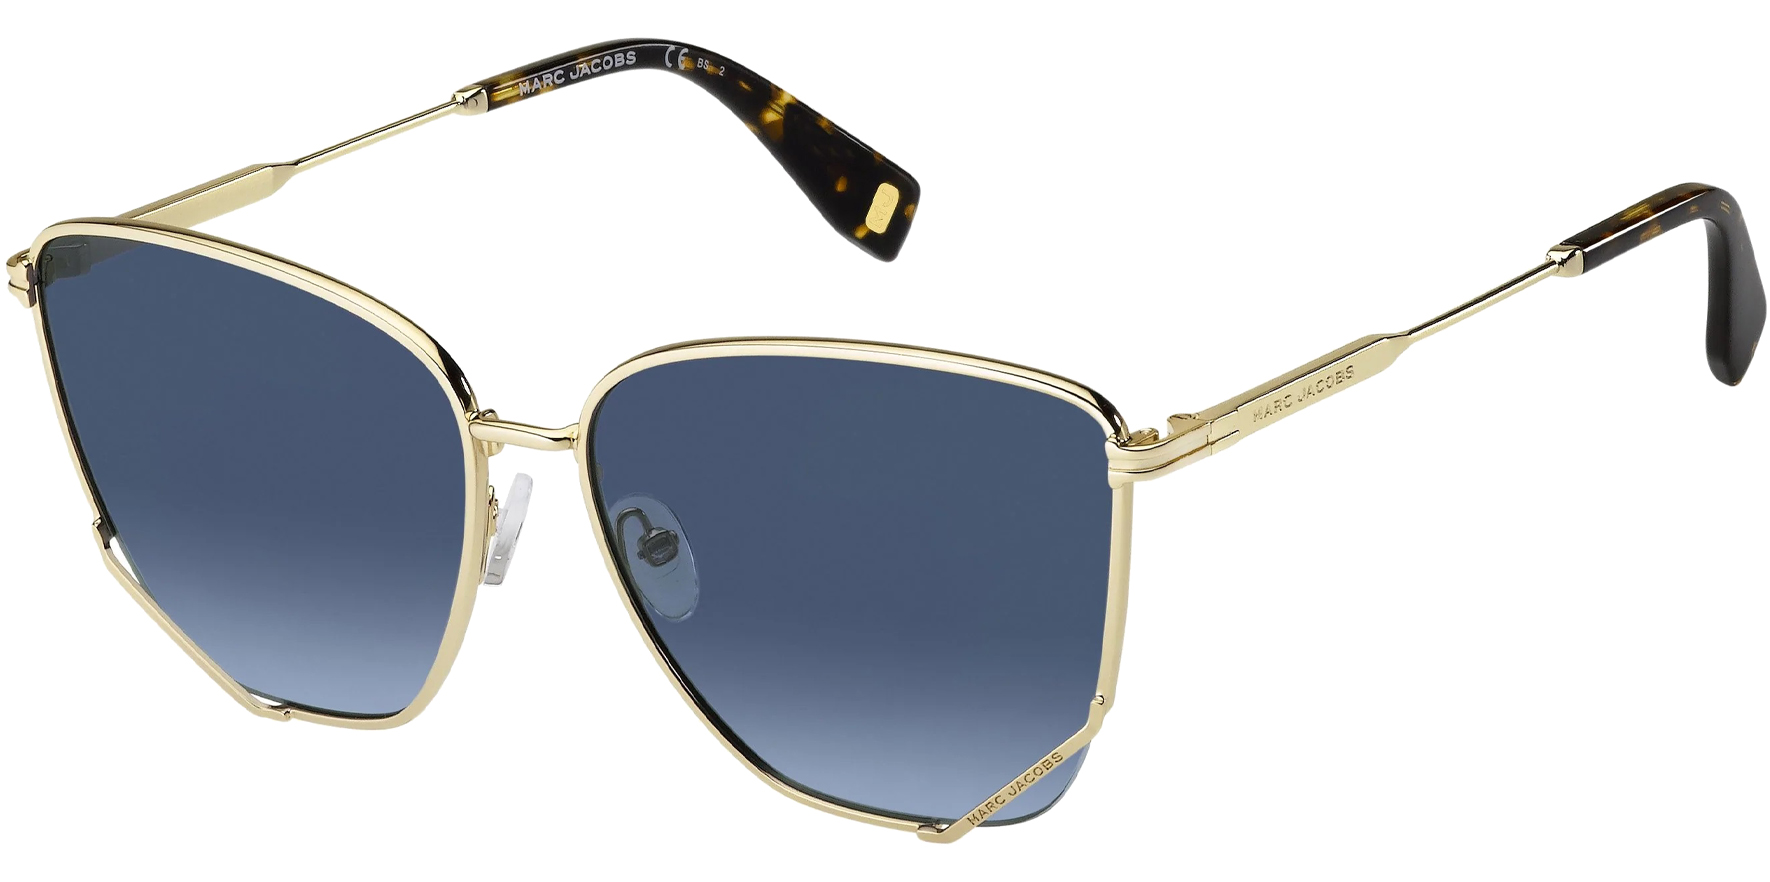 Marc Jacobs Women's Gold-Tone Asymmetric Square Sunglasses